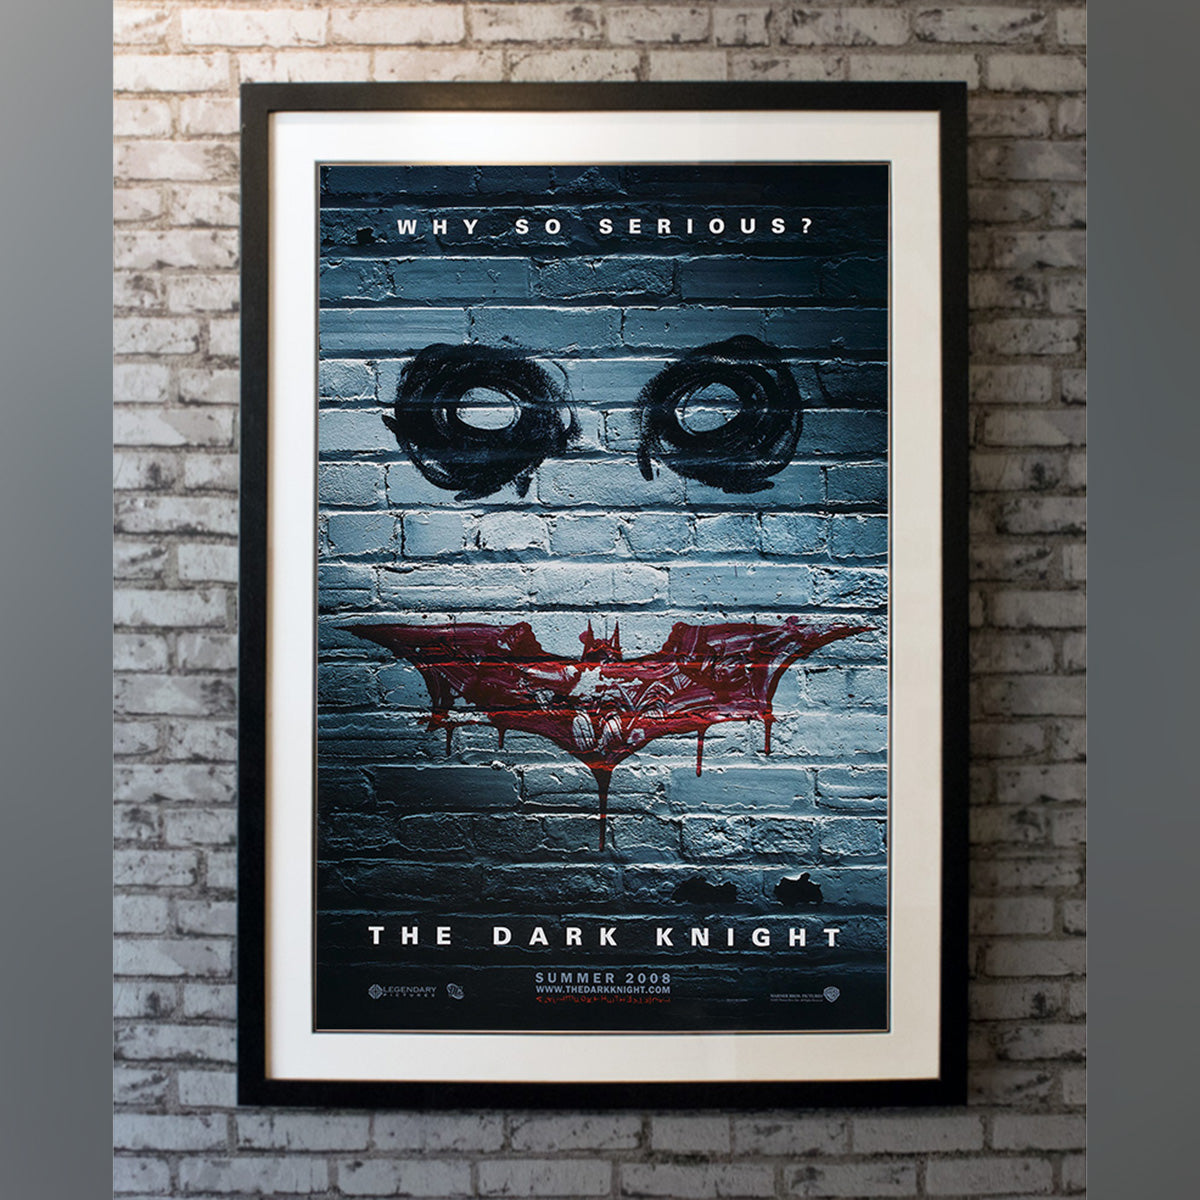 Original Movie Poster of Dark Knight, The (2008)